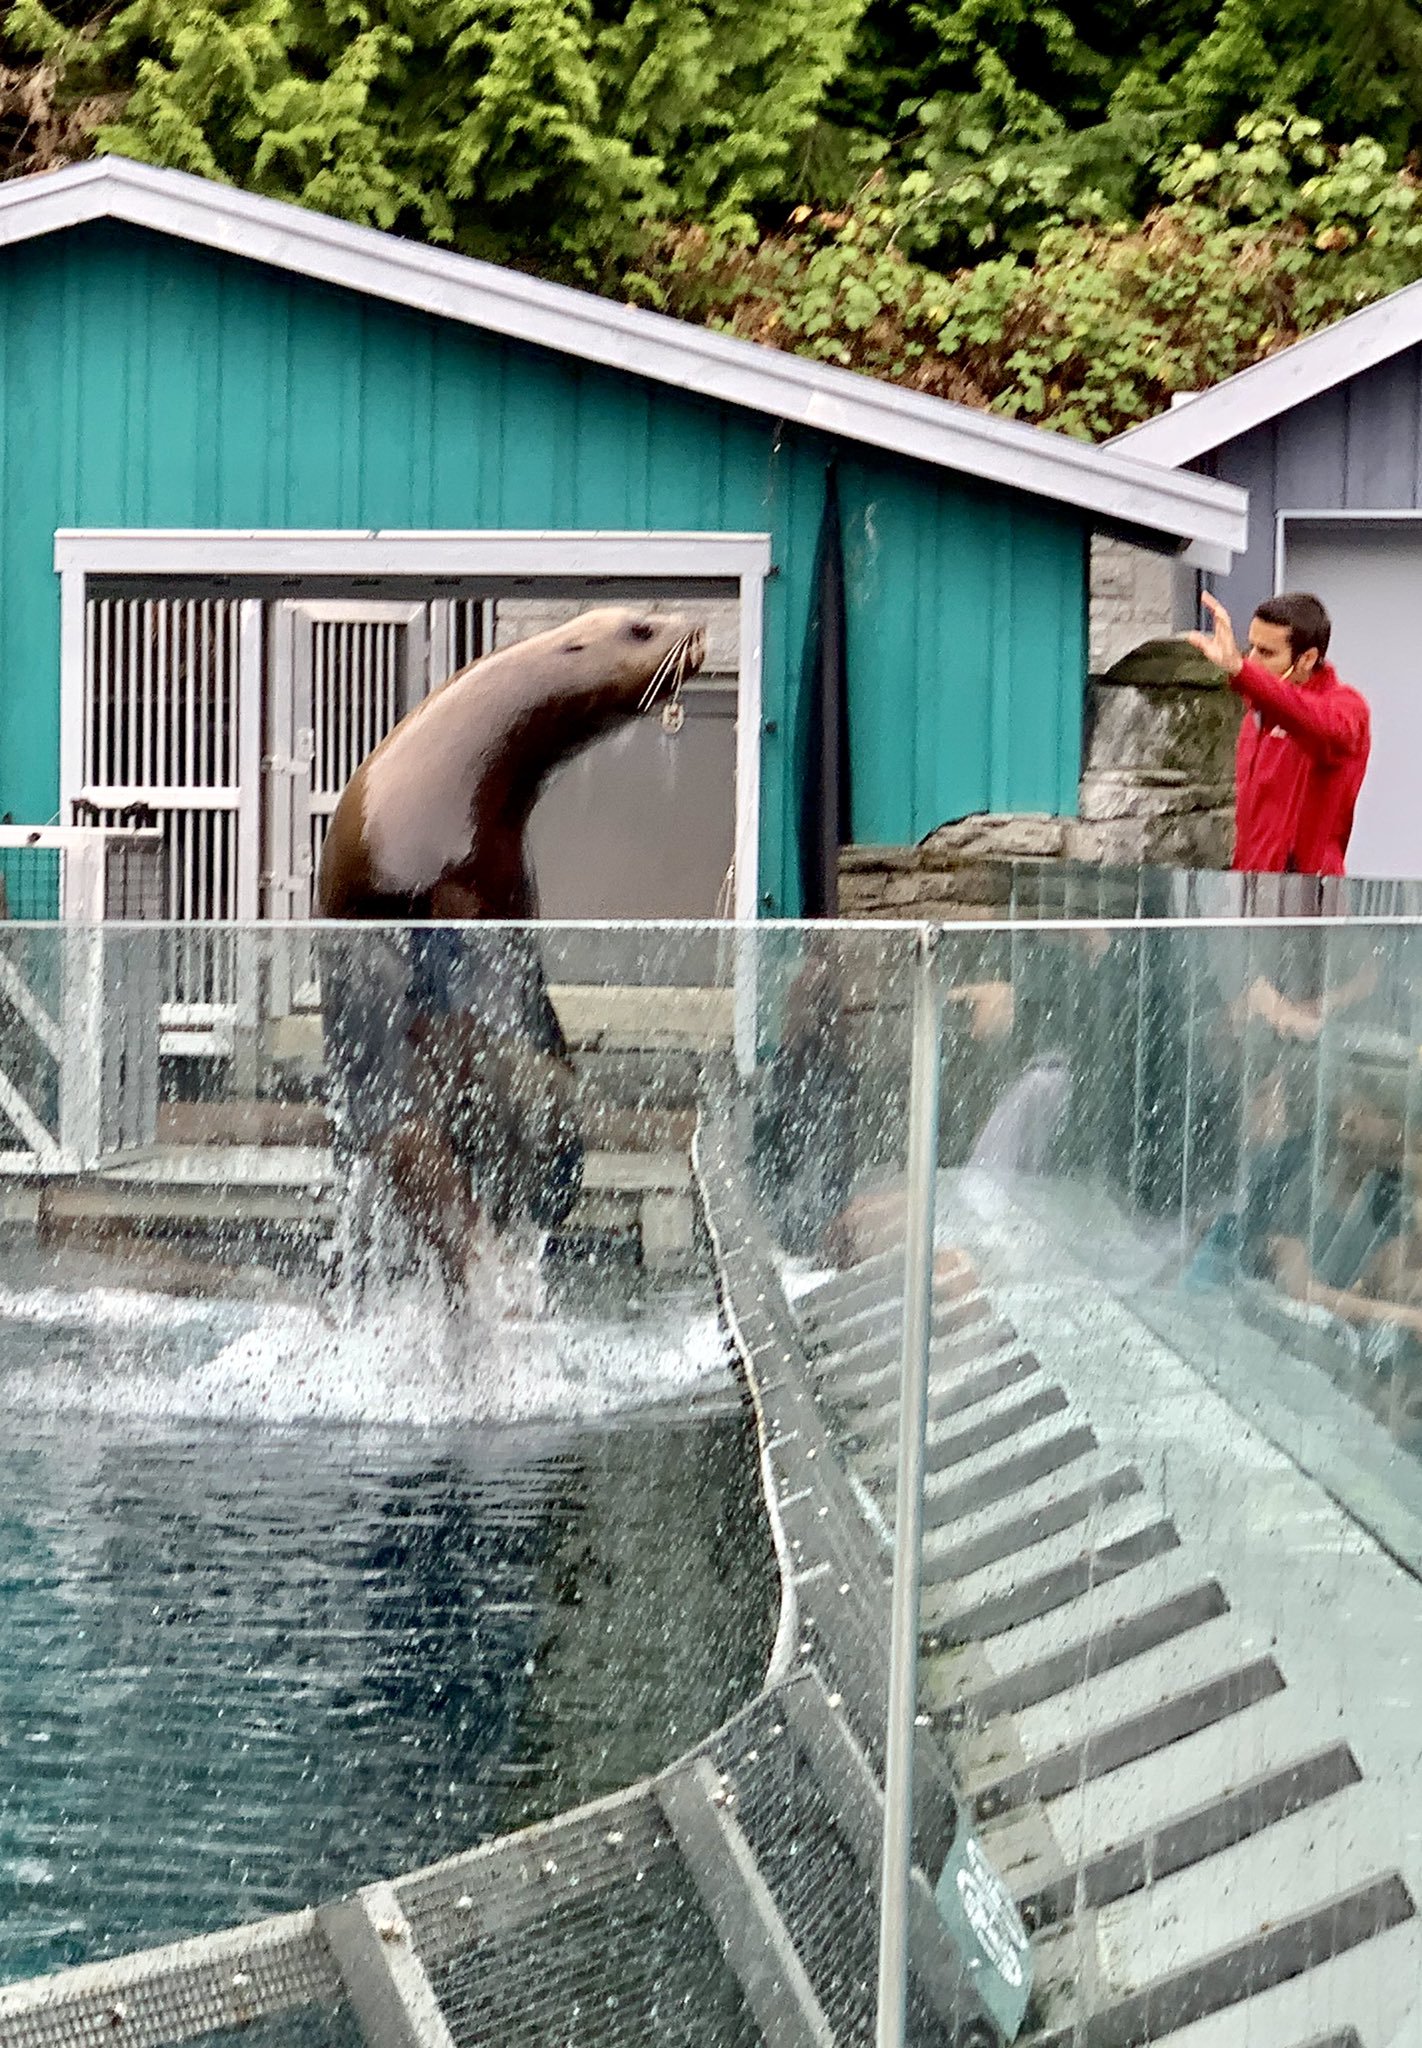 Steller's Bay Exhibit at the Vancouver Aquarium in Stanley Park, Vancouver, BC, Canada